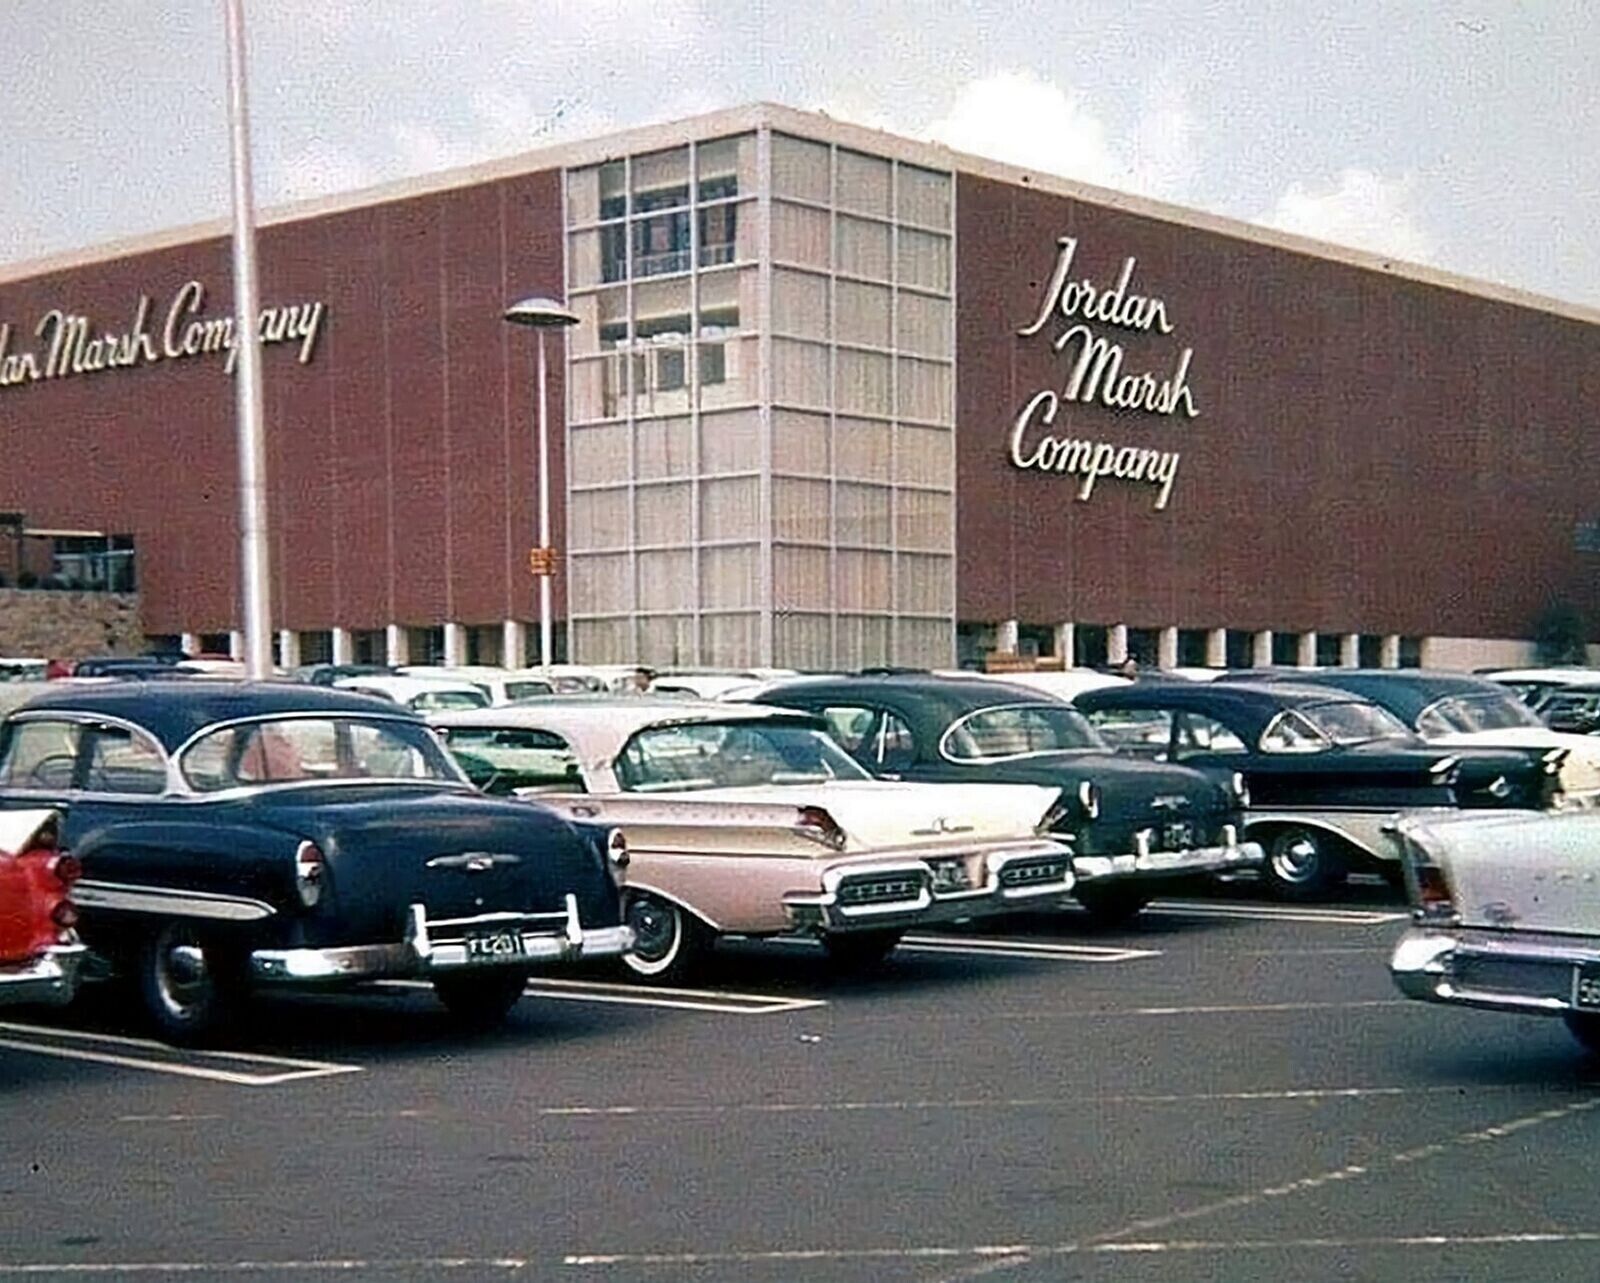 1958 JORDAN MARSH Department Store Classic Cars in Parking Lot Picture Photo 4x6